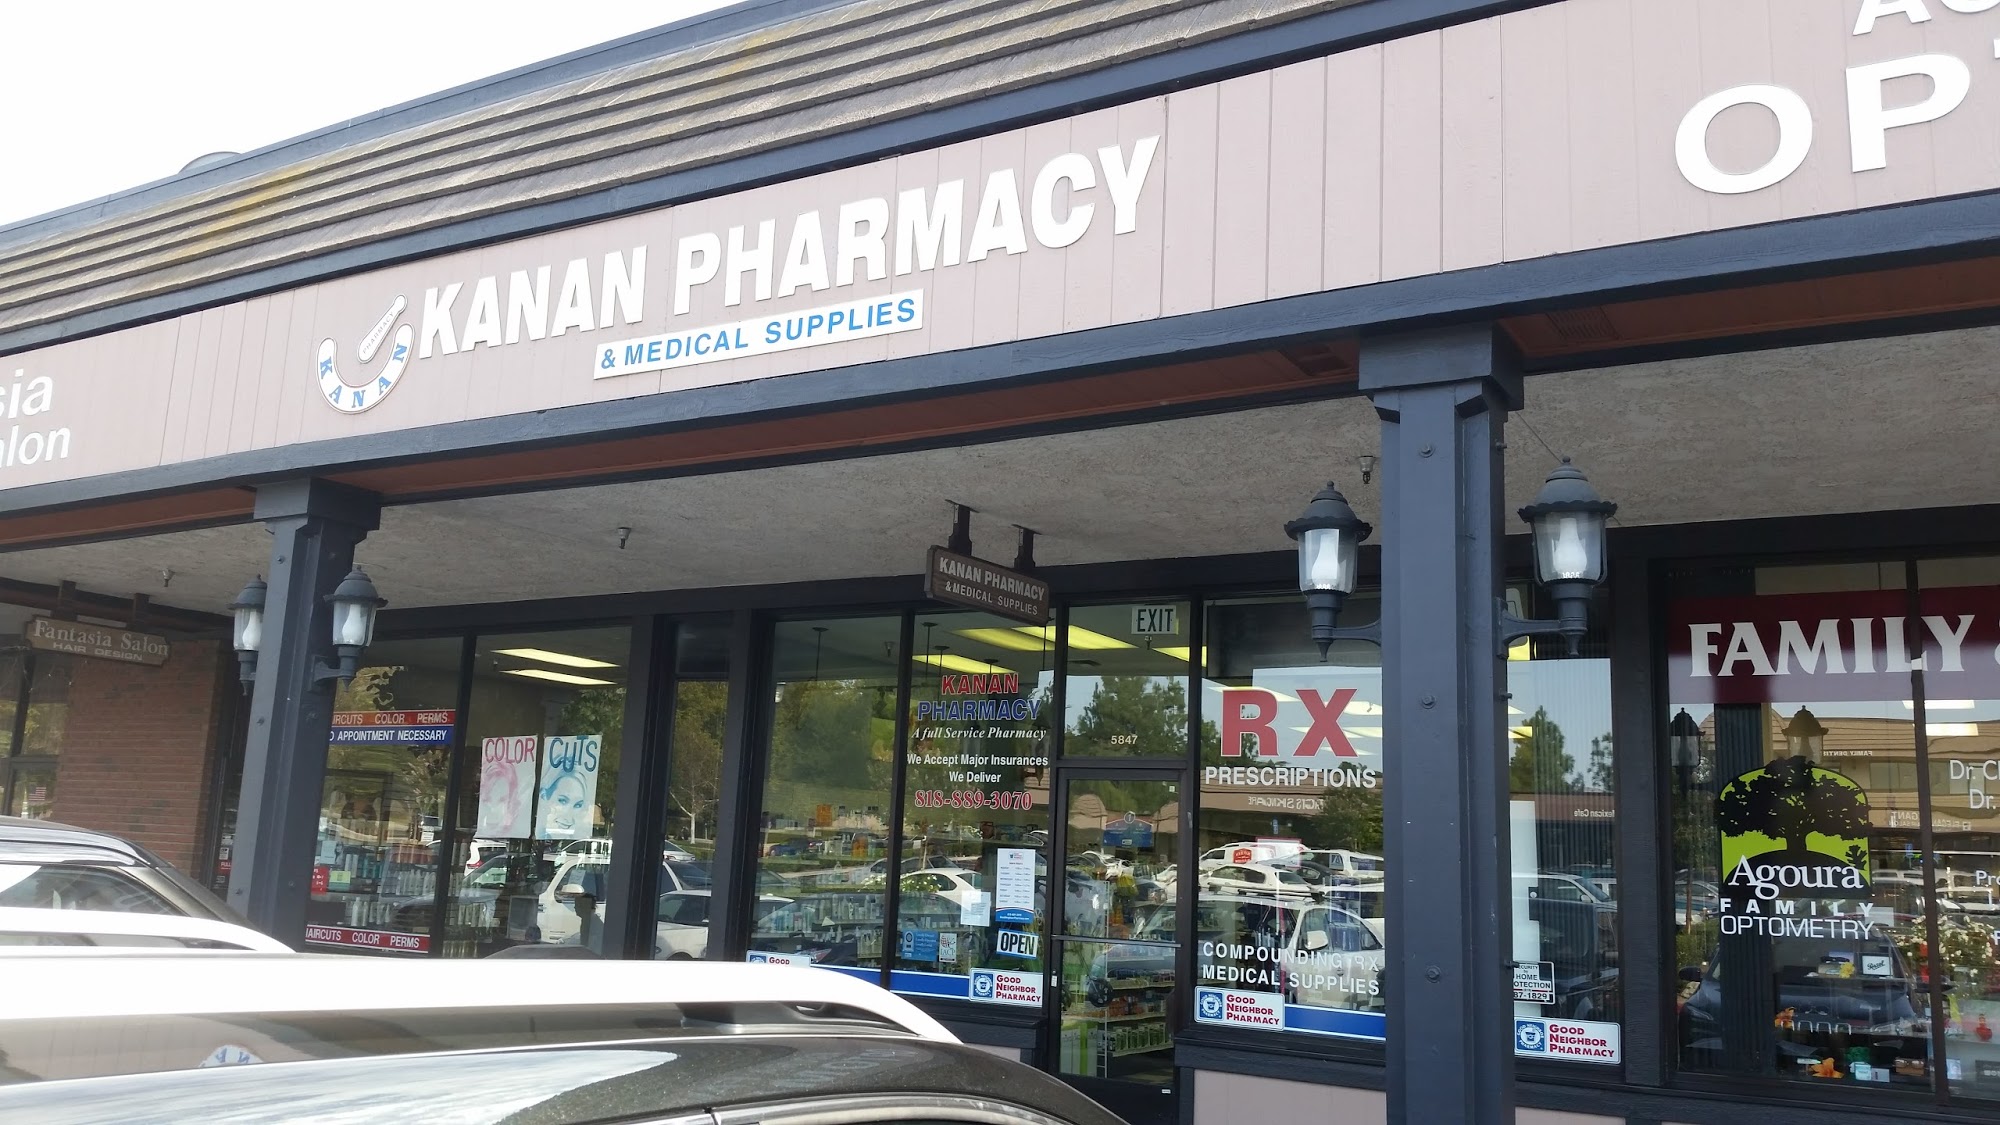 Kanan Pharmacy & Medical Supplies